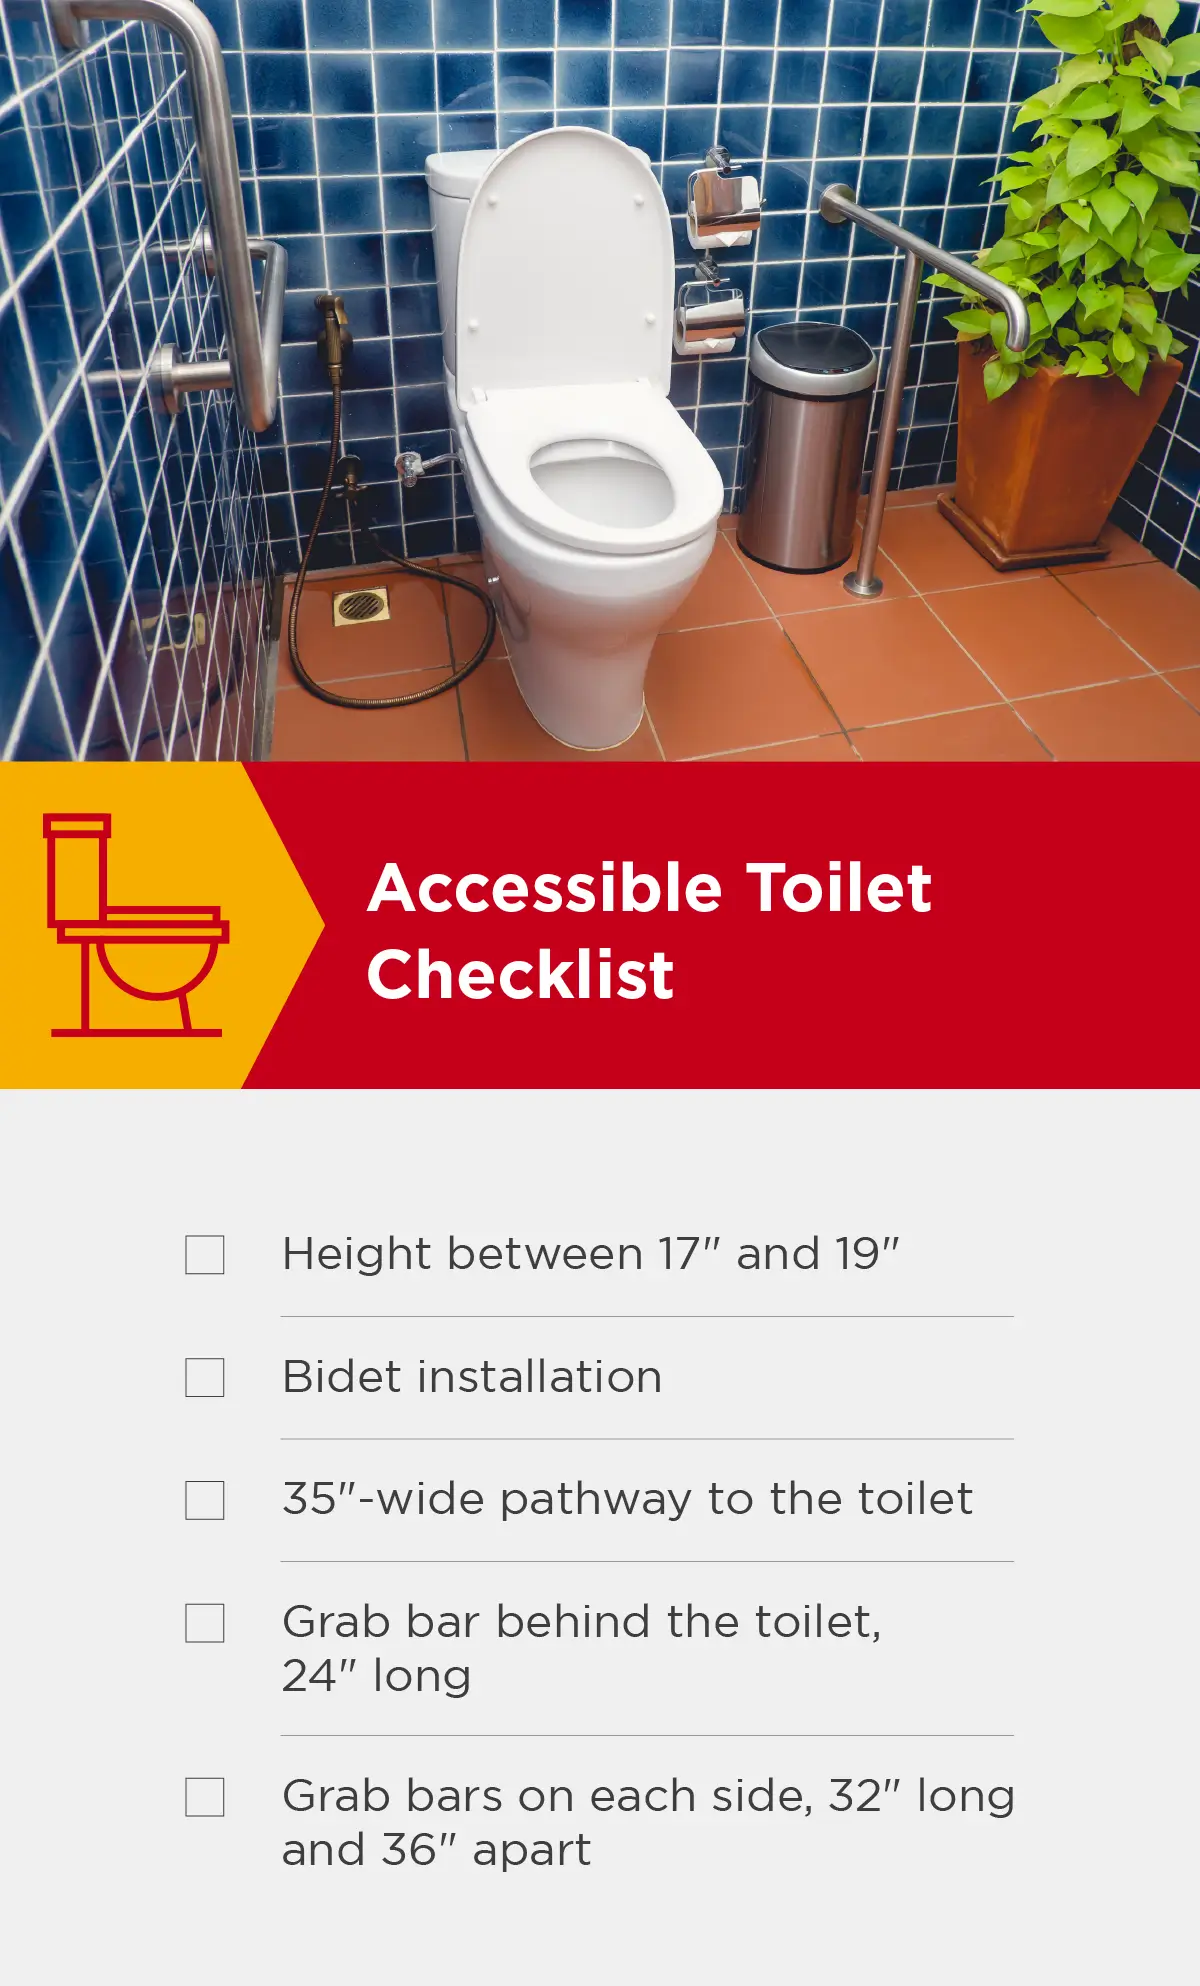 Accessible toilet checklist